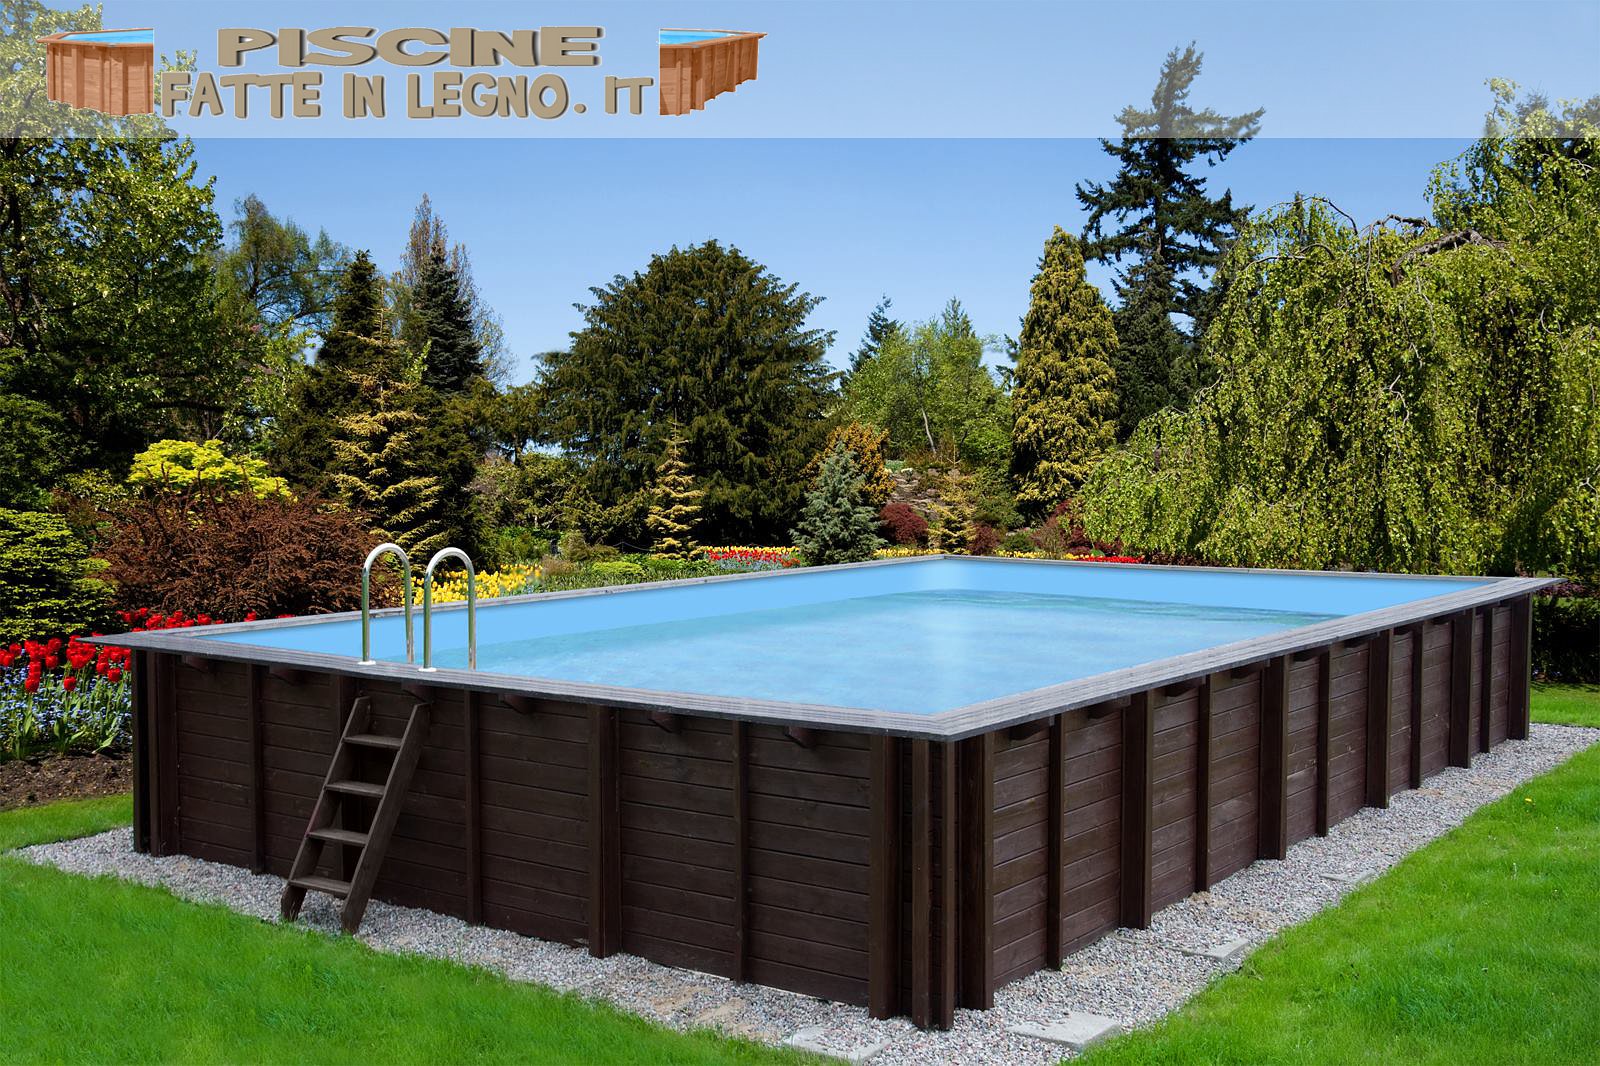 piscine fatte in legno piscine in legno madelux